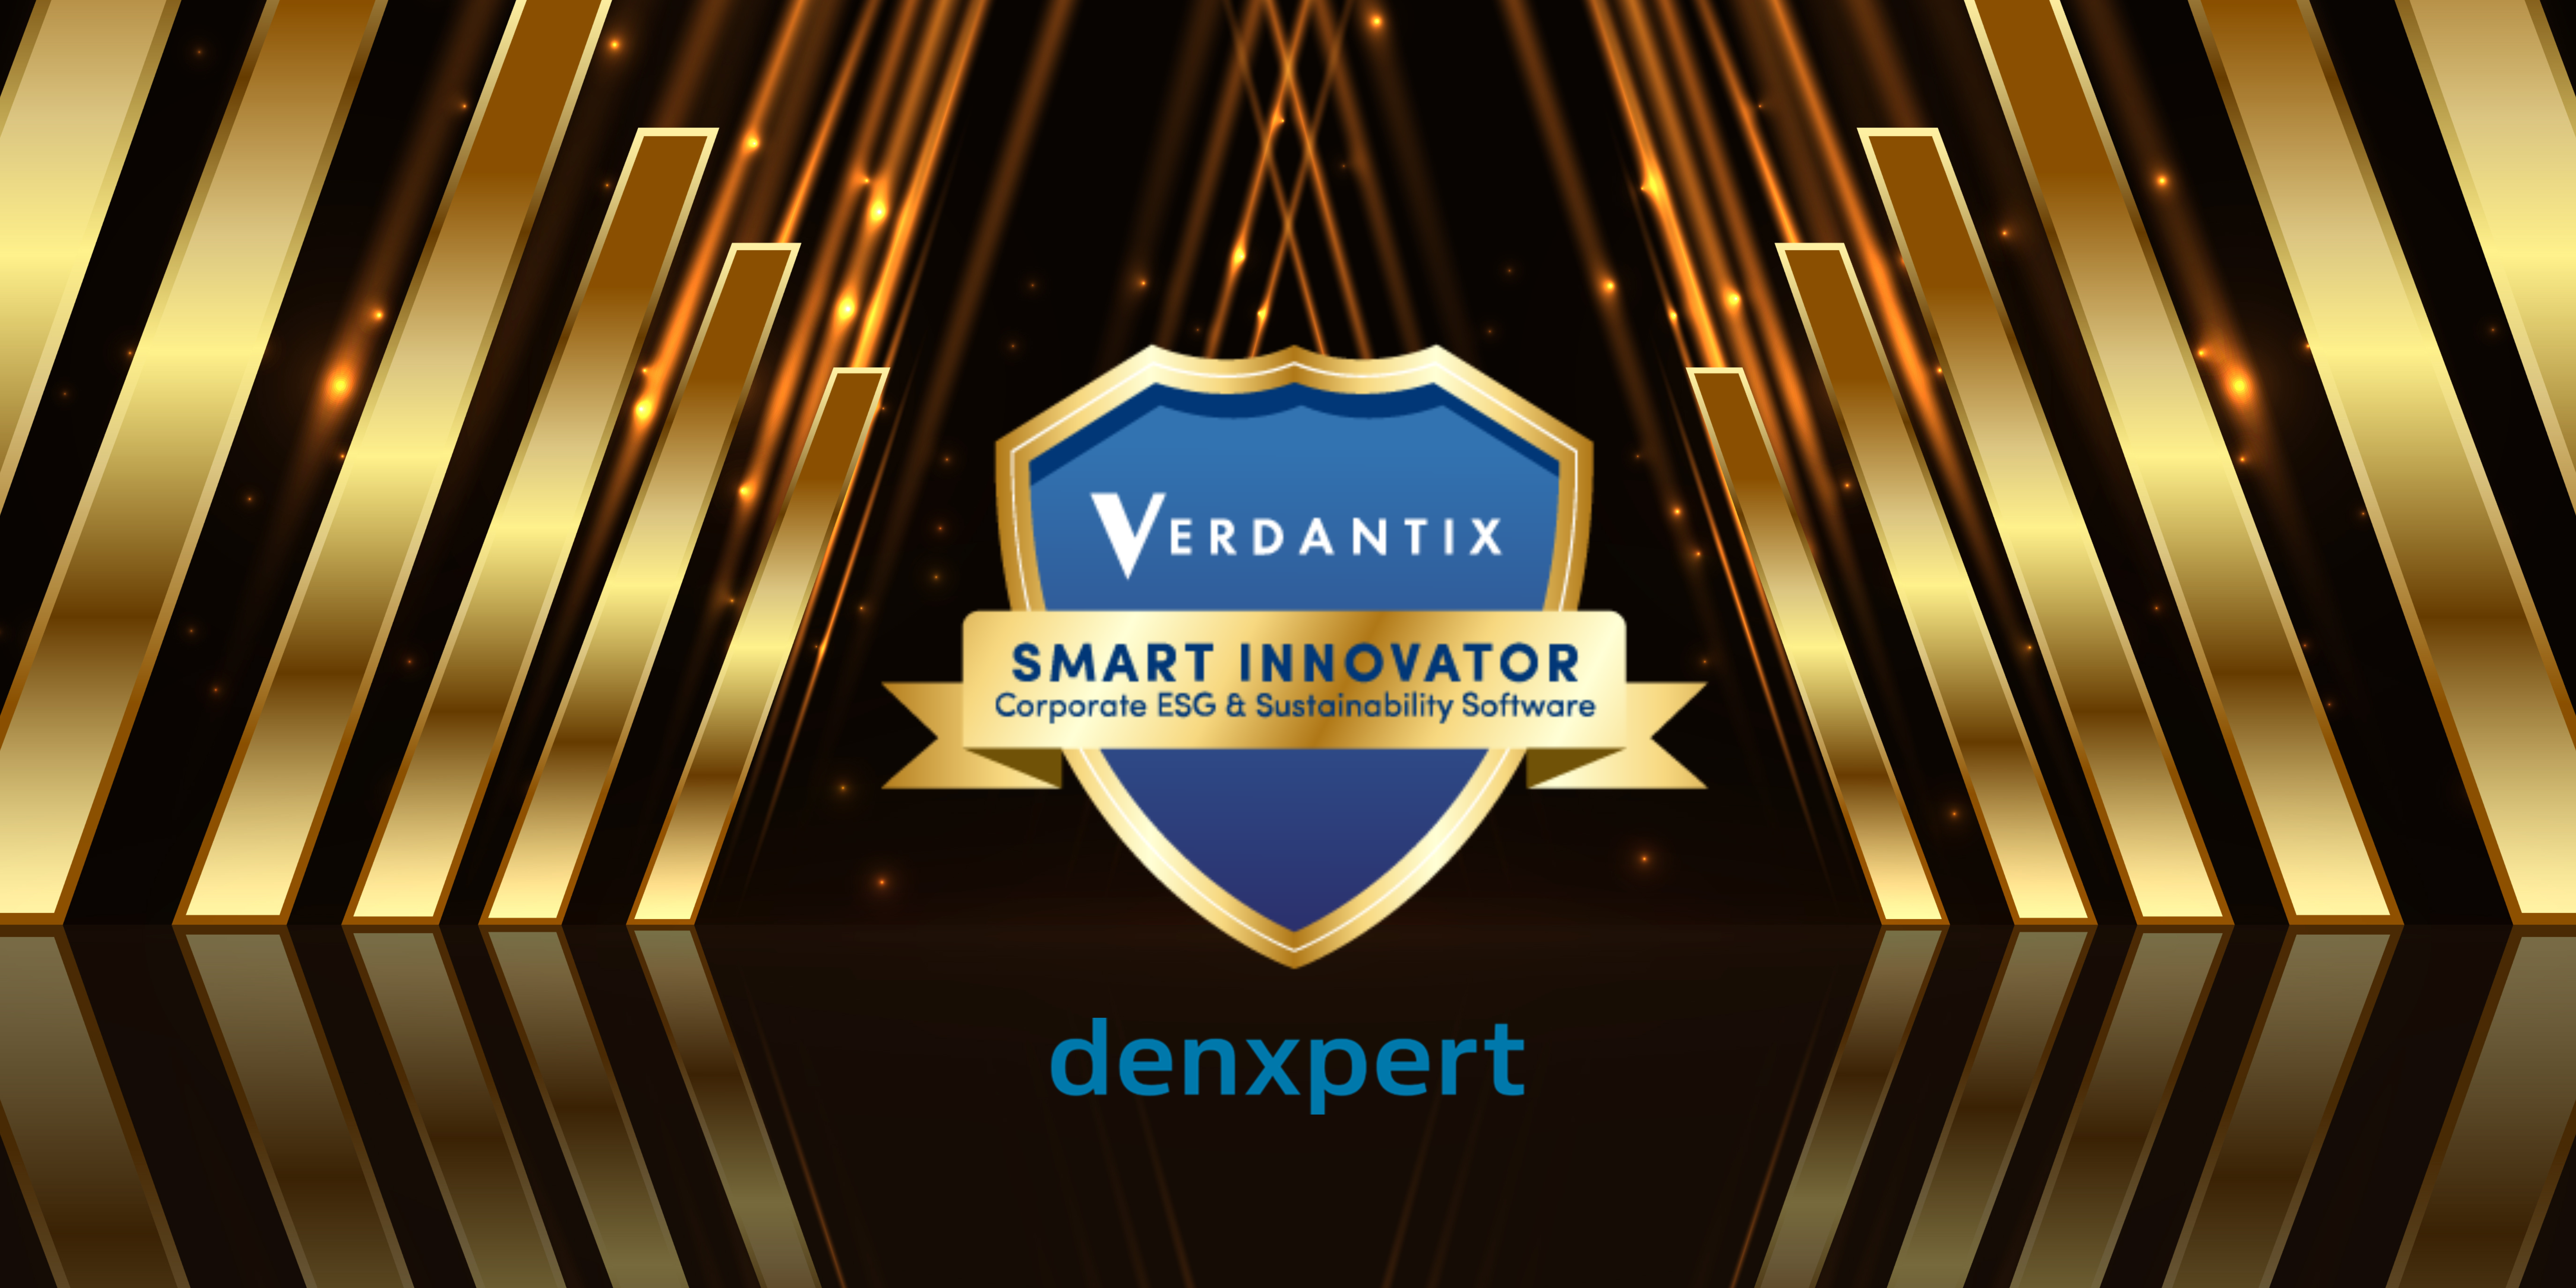 Verdantix recognizes denxpert as a Smart Innovator